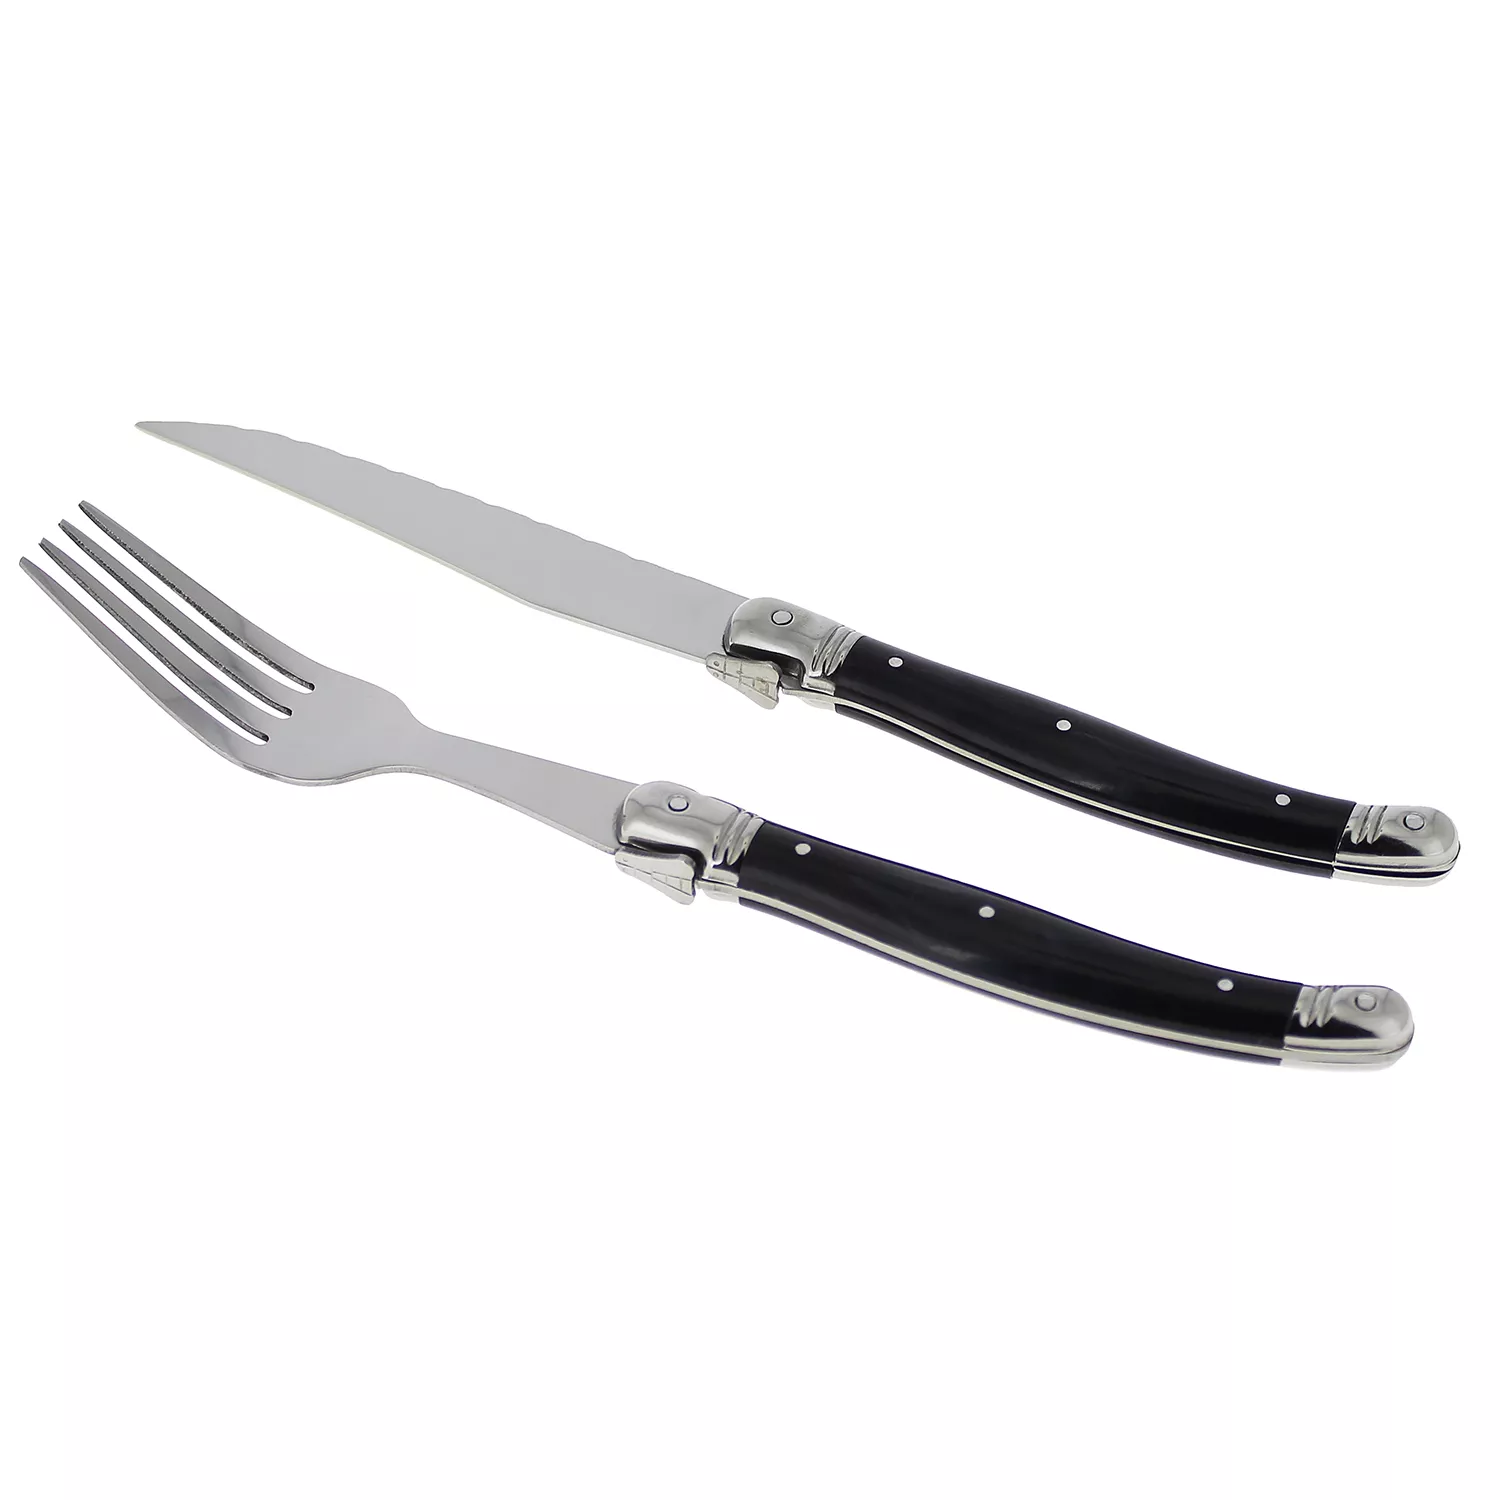 Damascus Cutlery】Damascus Steel 8pcs 5 Steak Knife and Fork Set